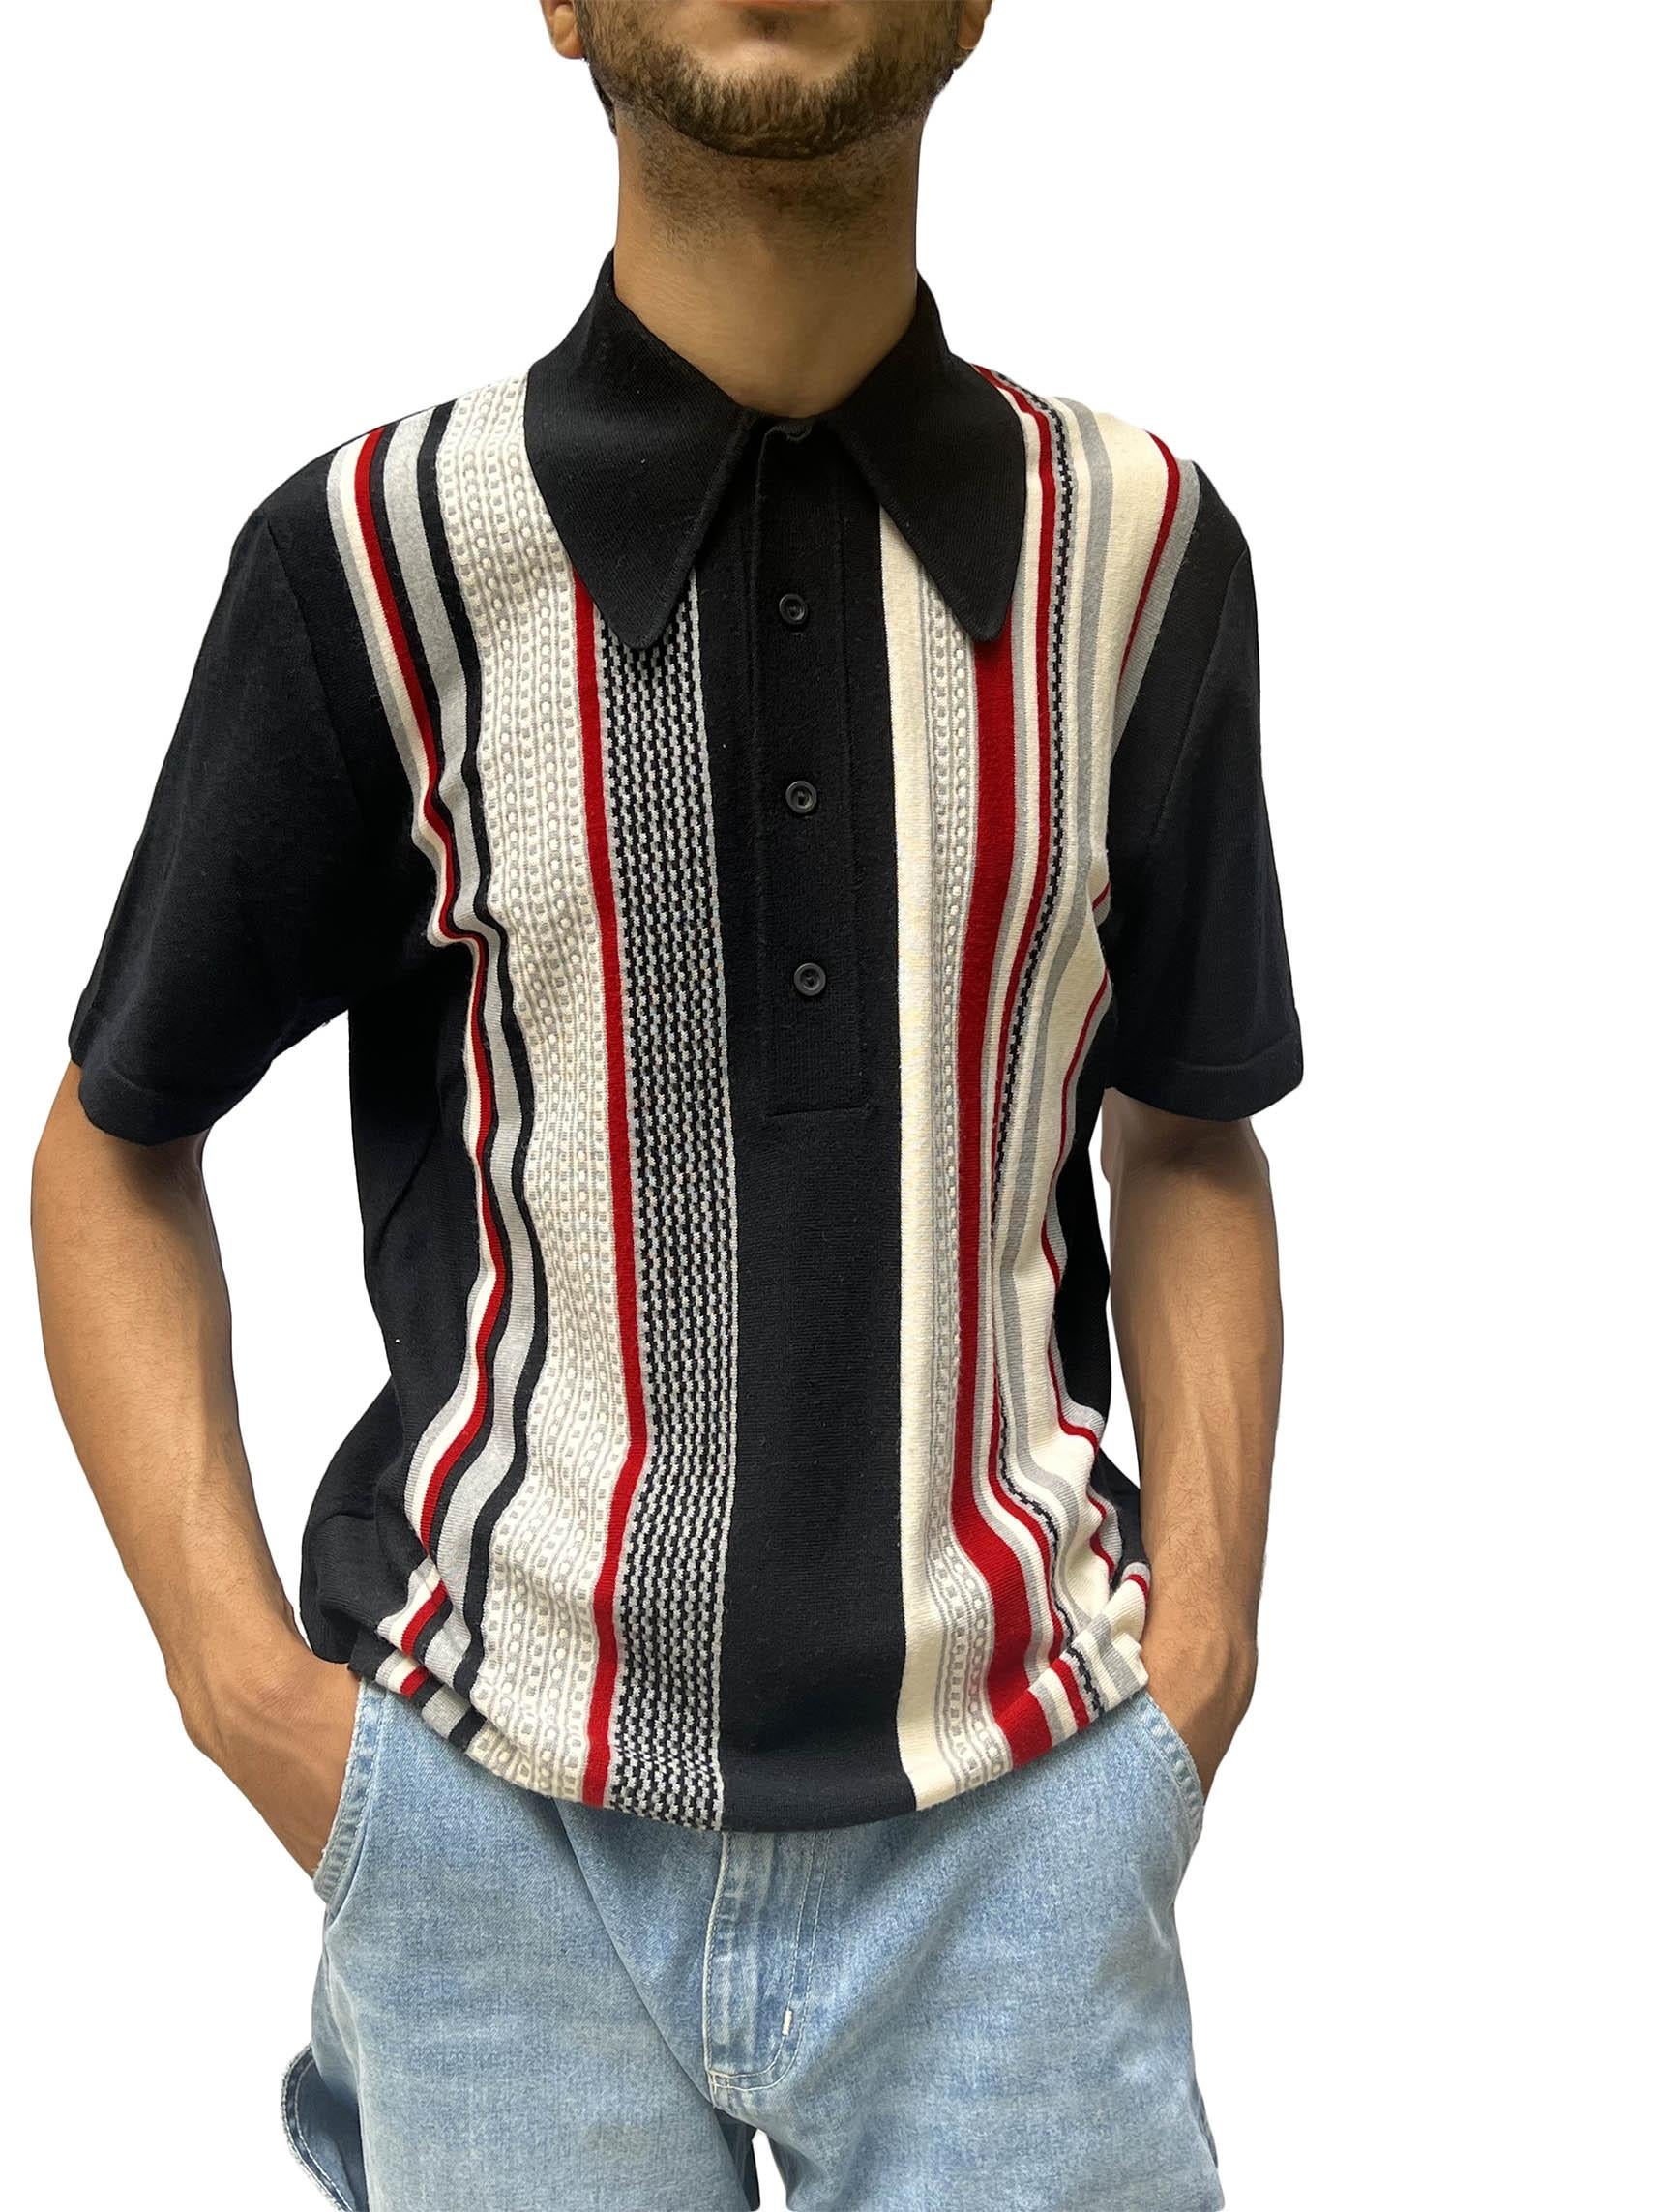 1960s italian knit shirts